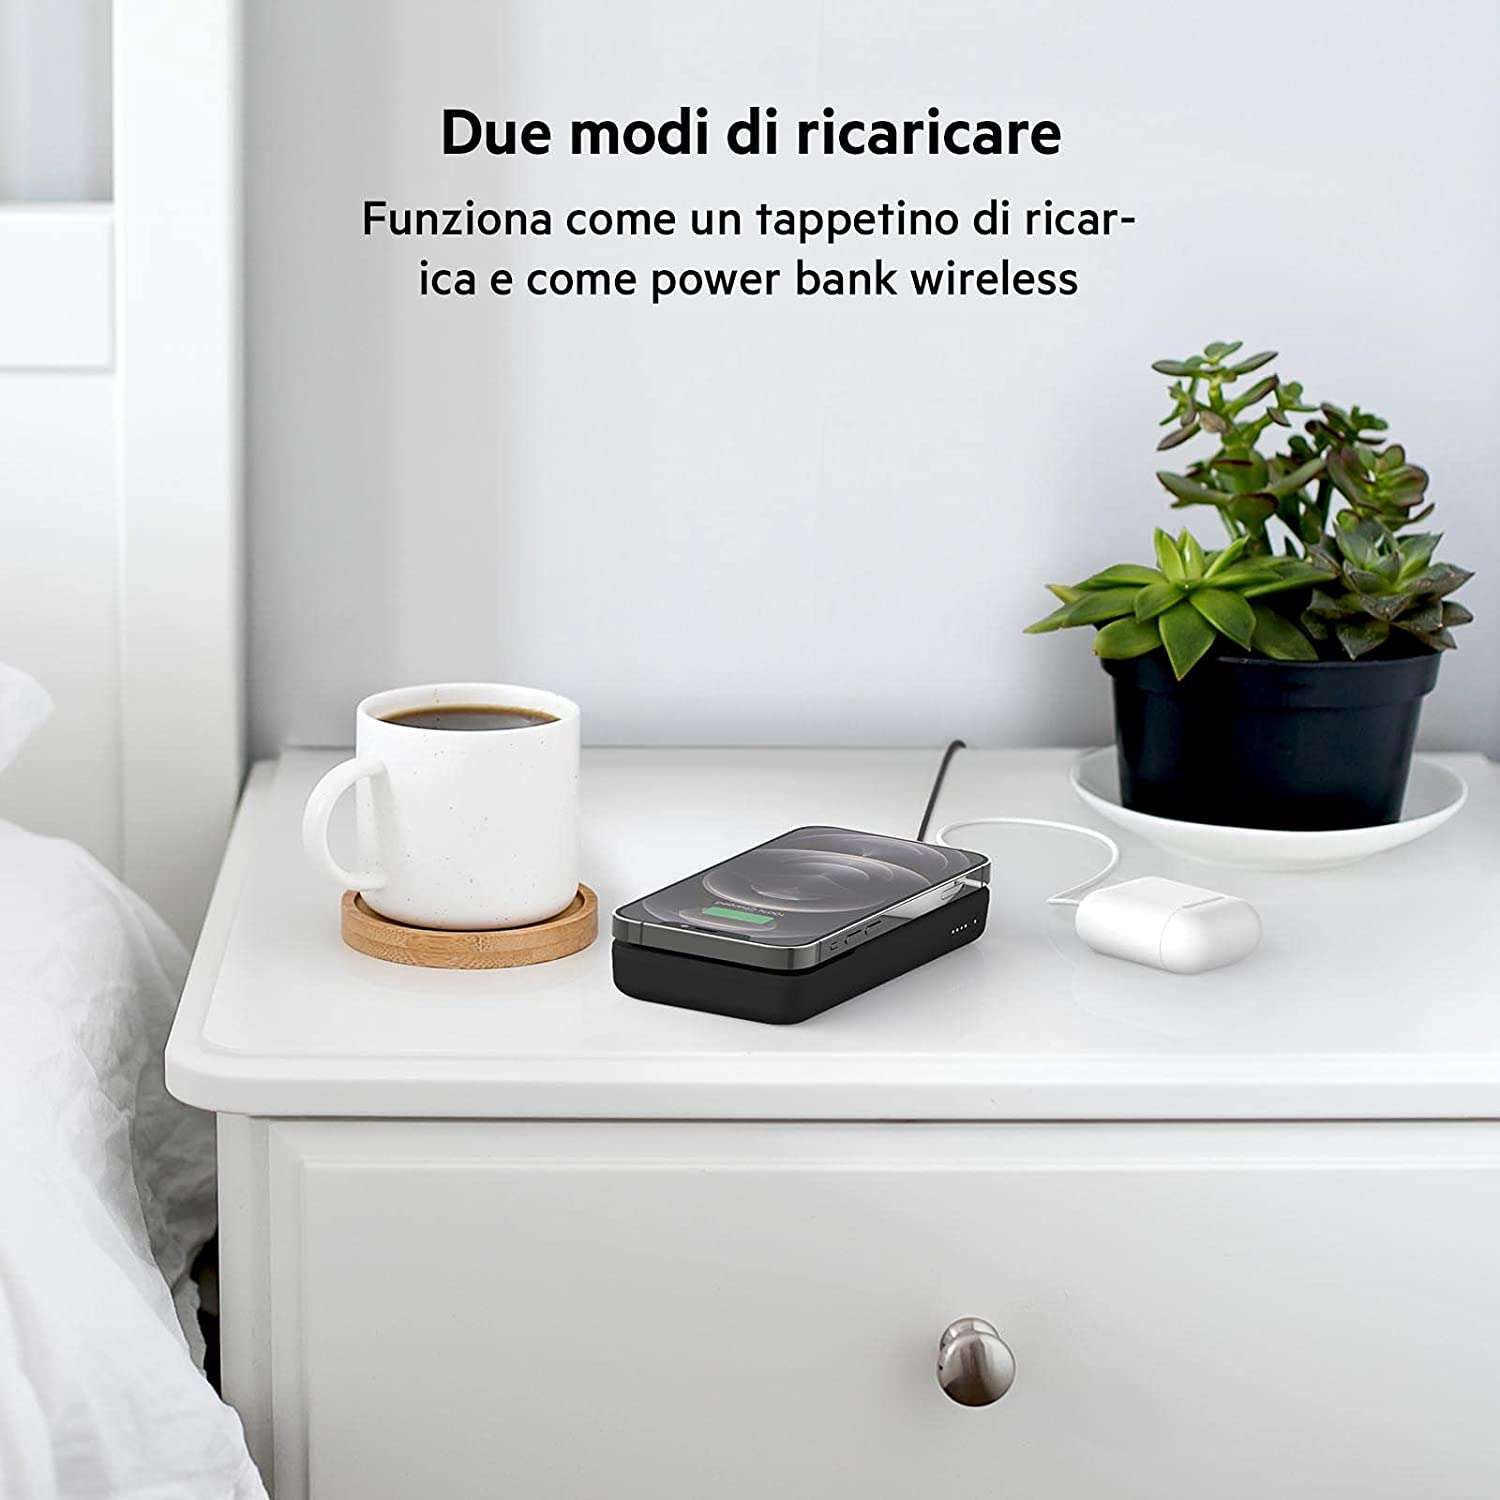 caricabatteria-wireless-belkin-tappetino-offerta-amazon-